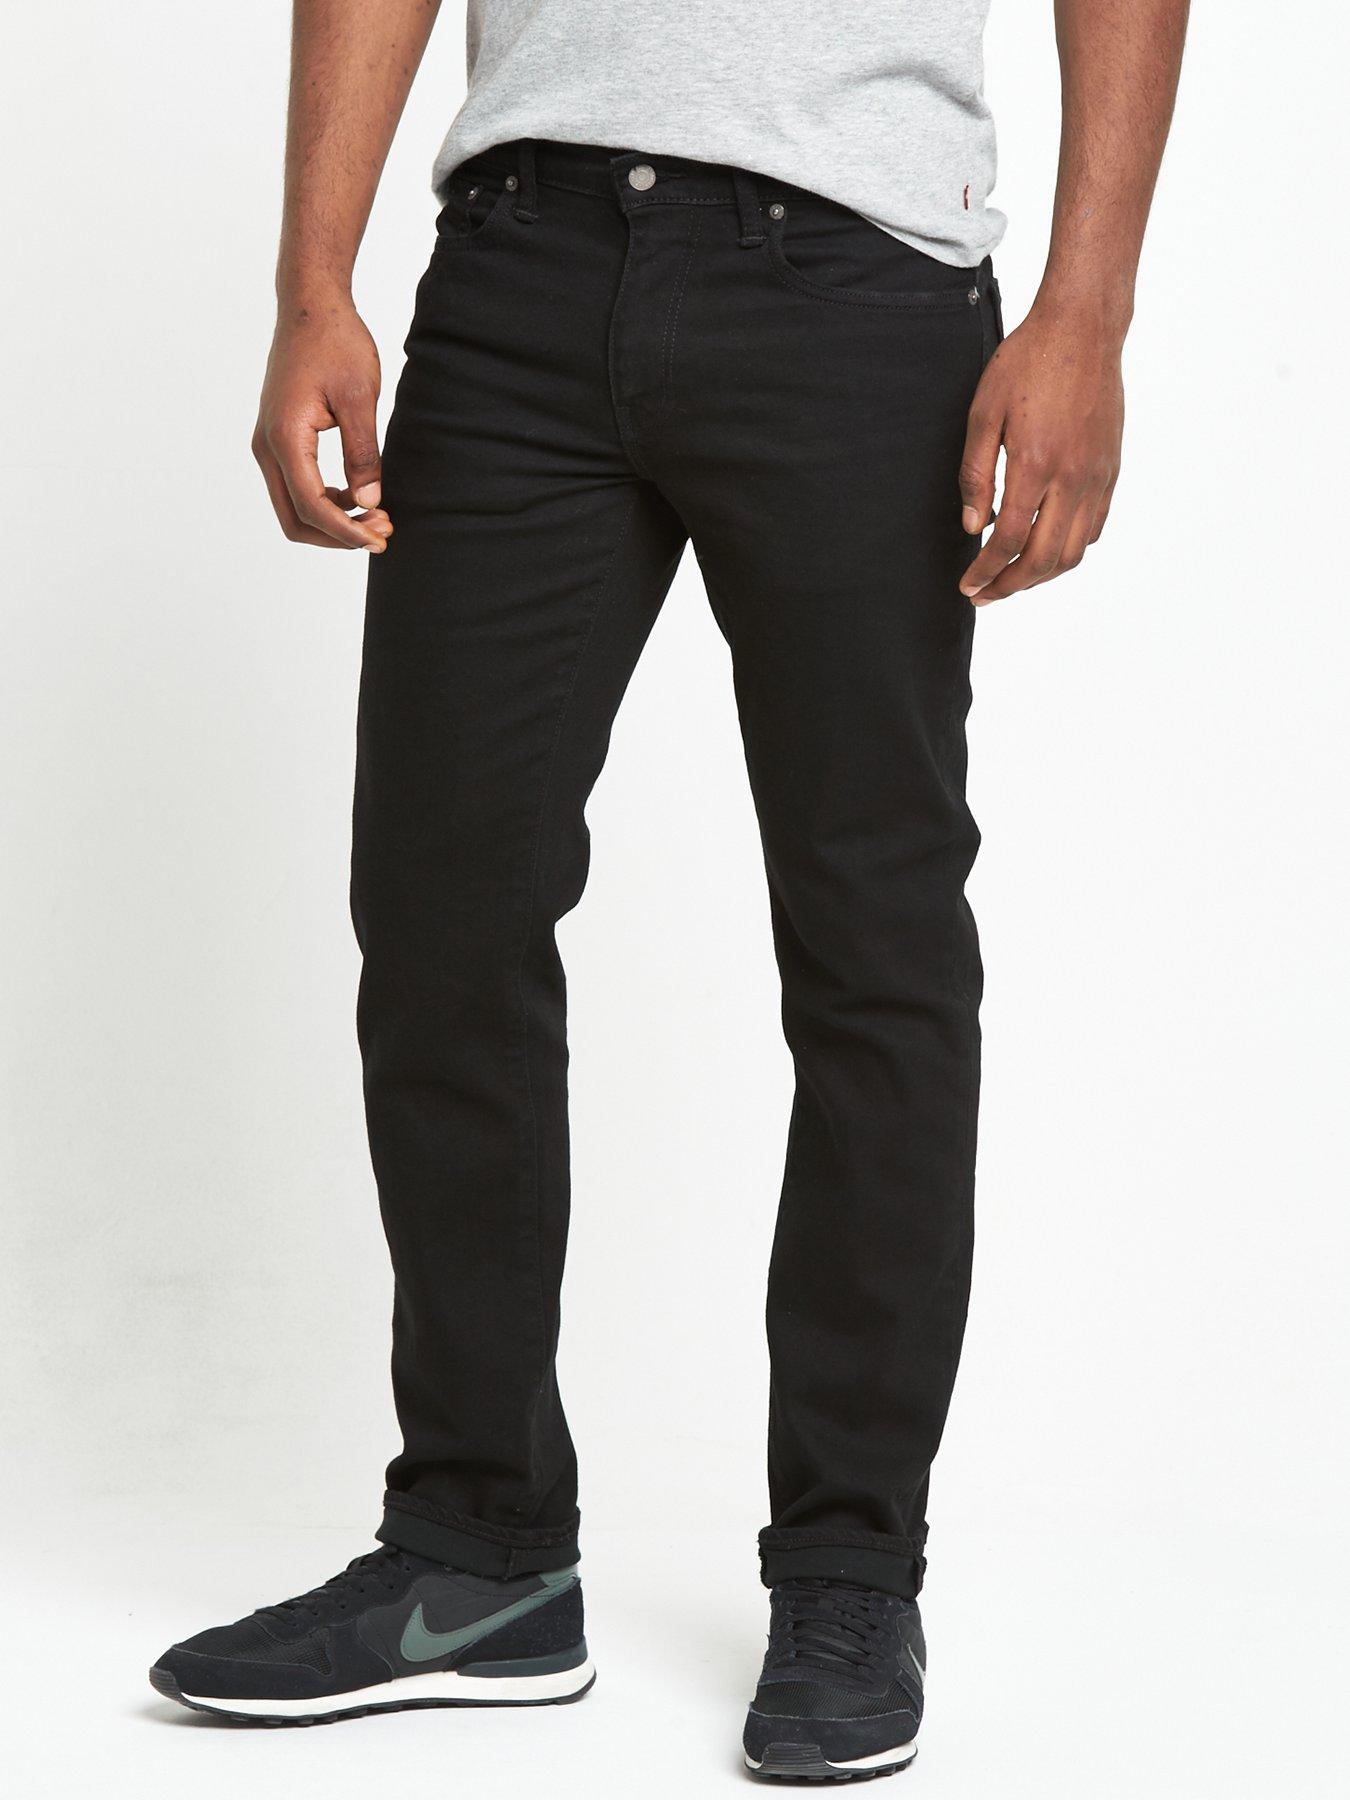 levi's black jeans slim fit